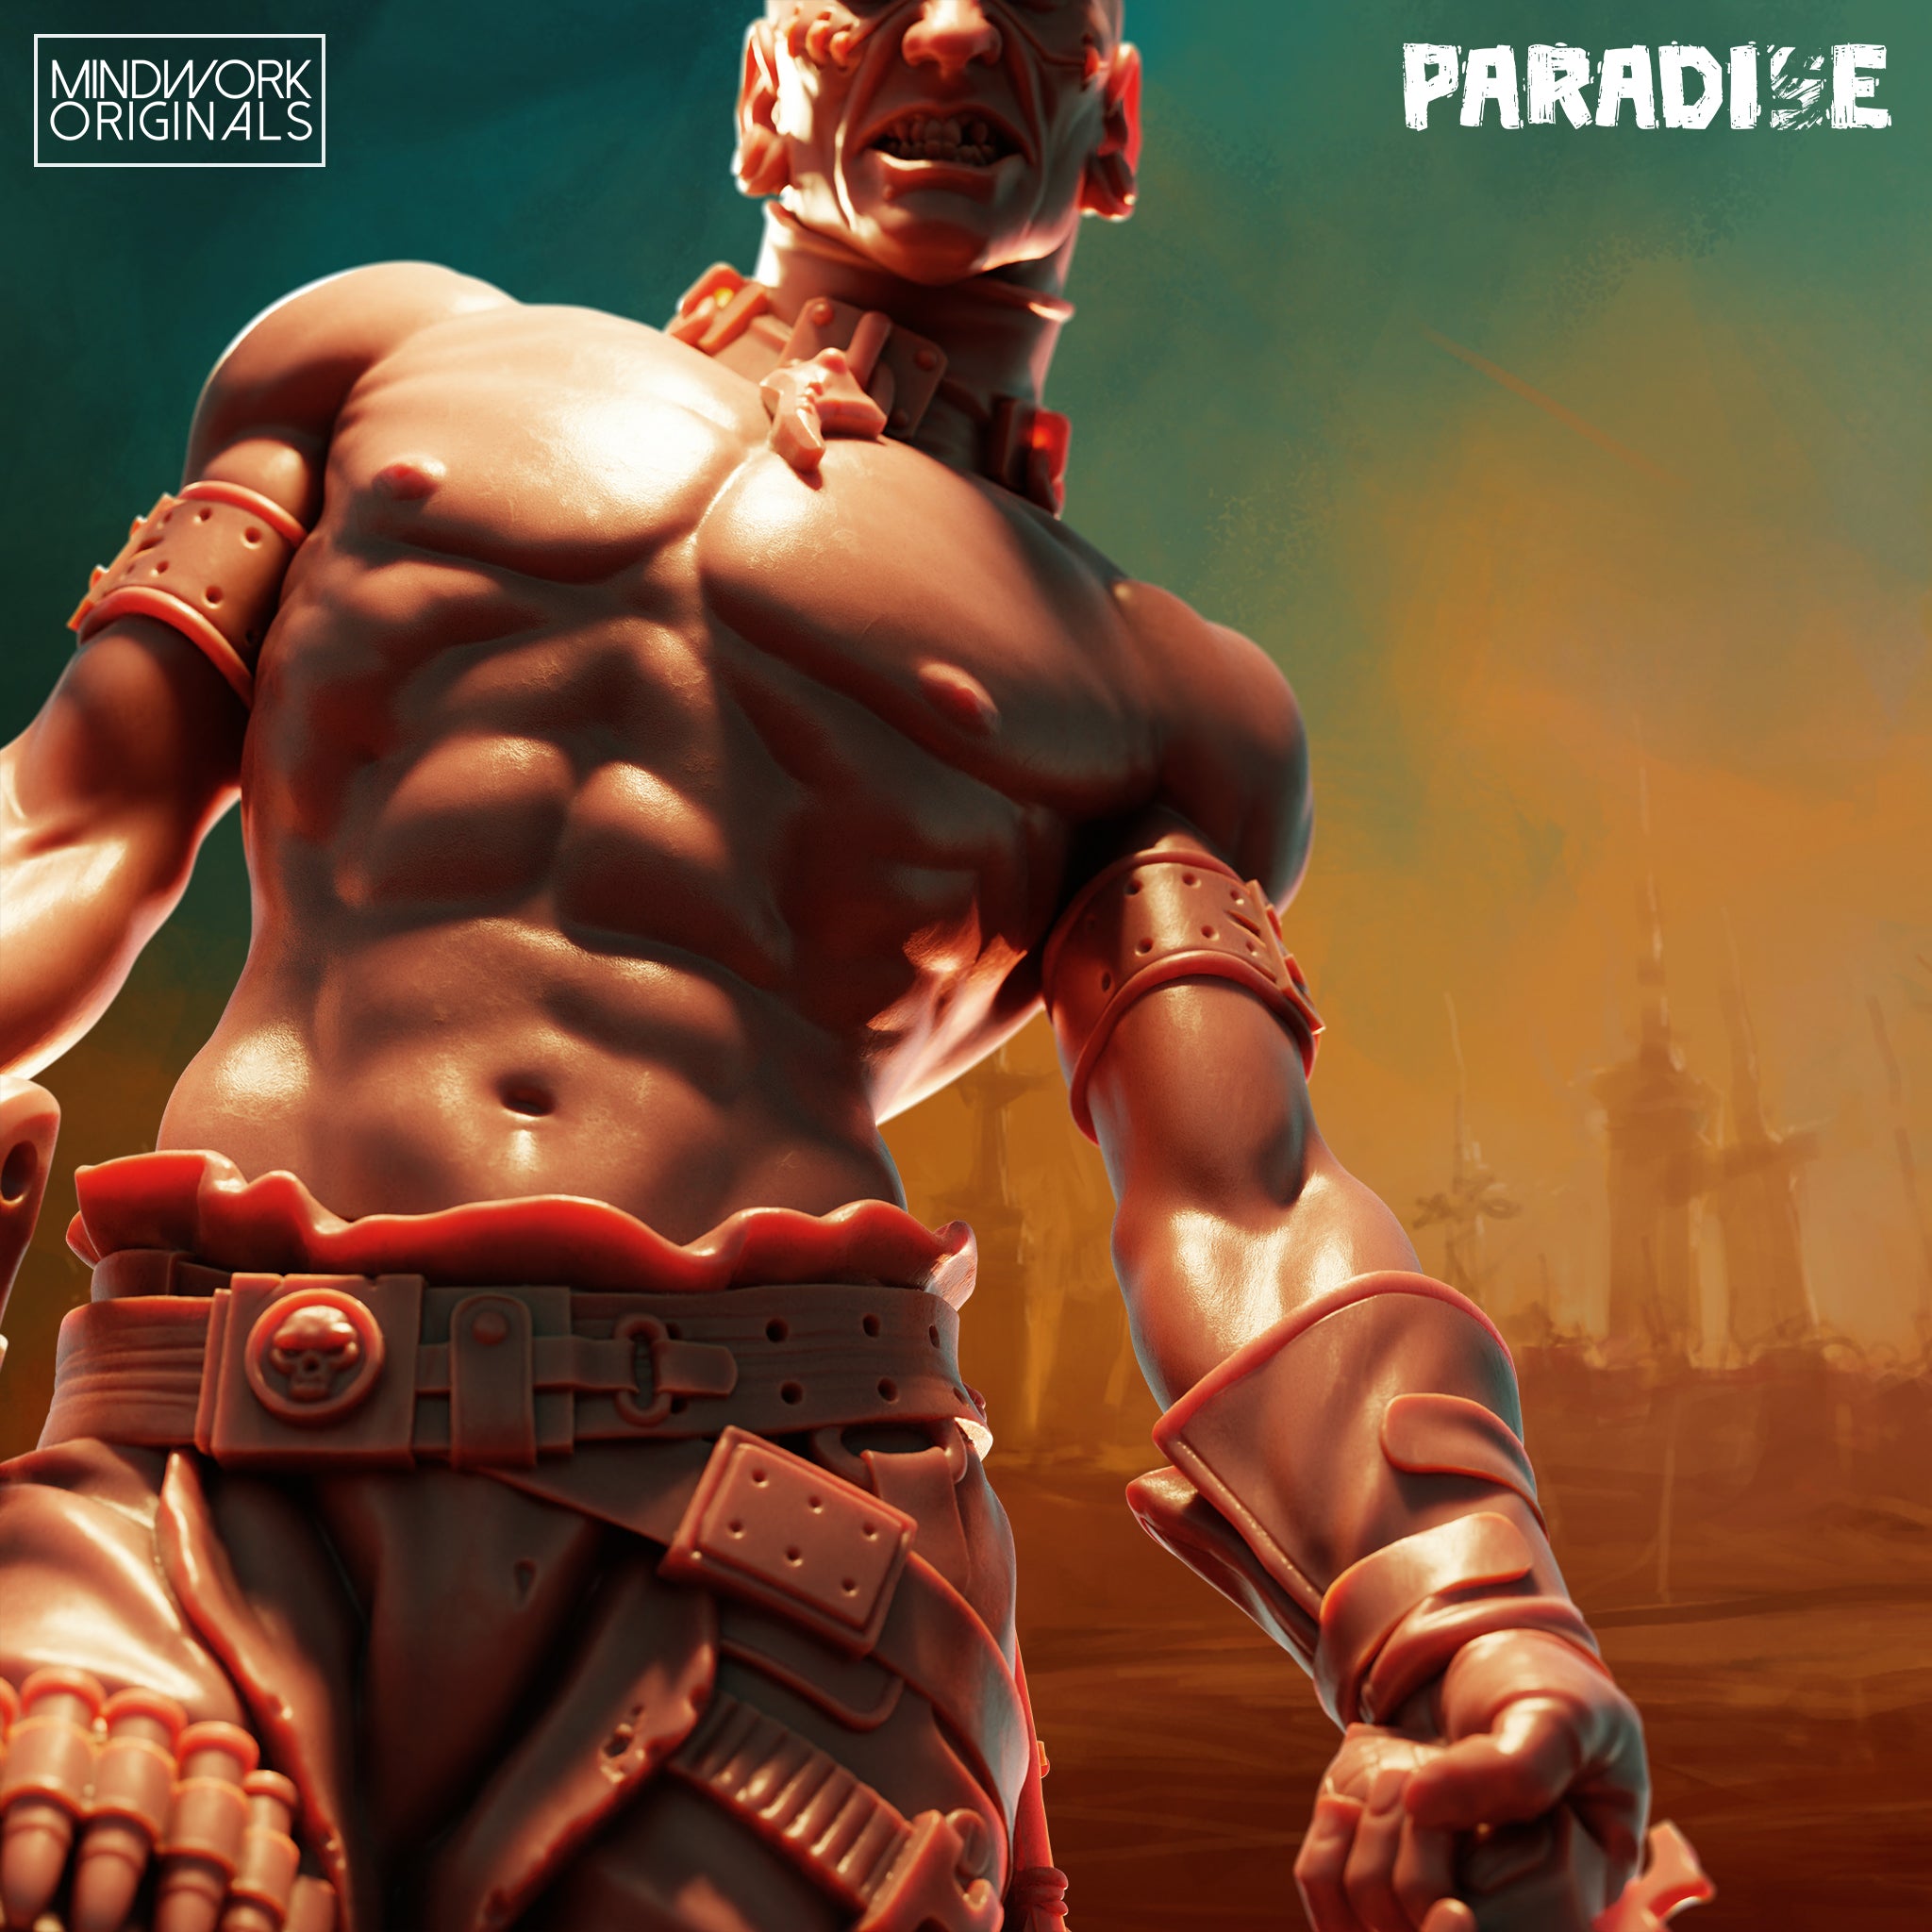 Paradise - Jericho